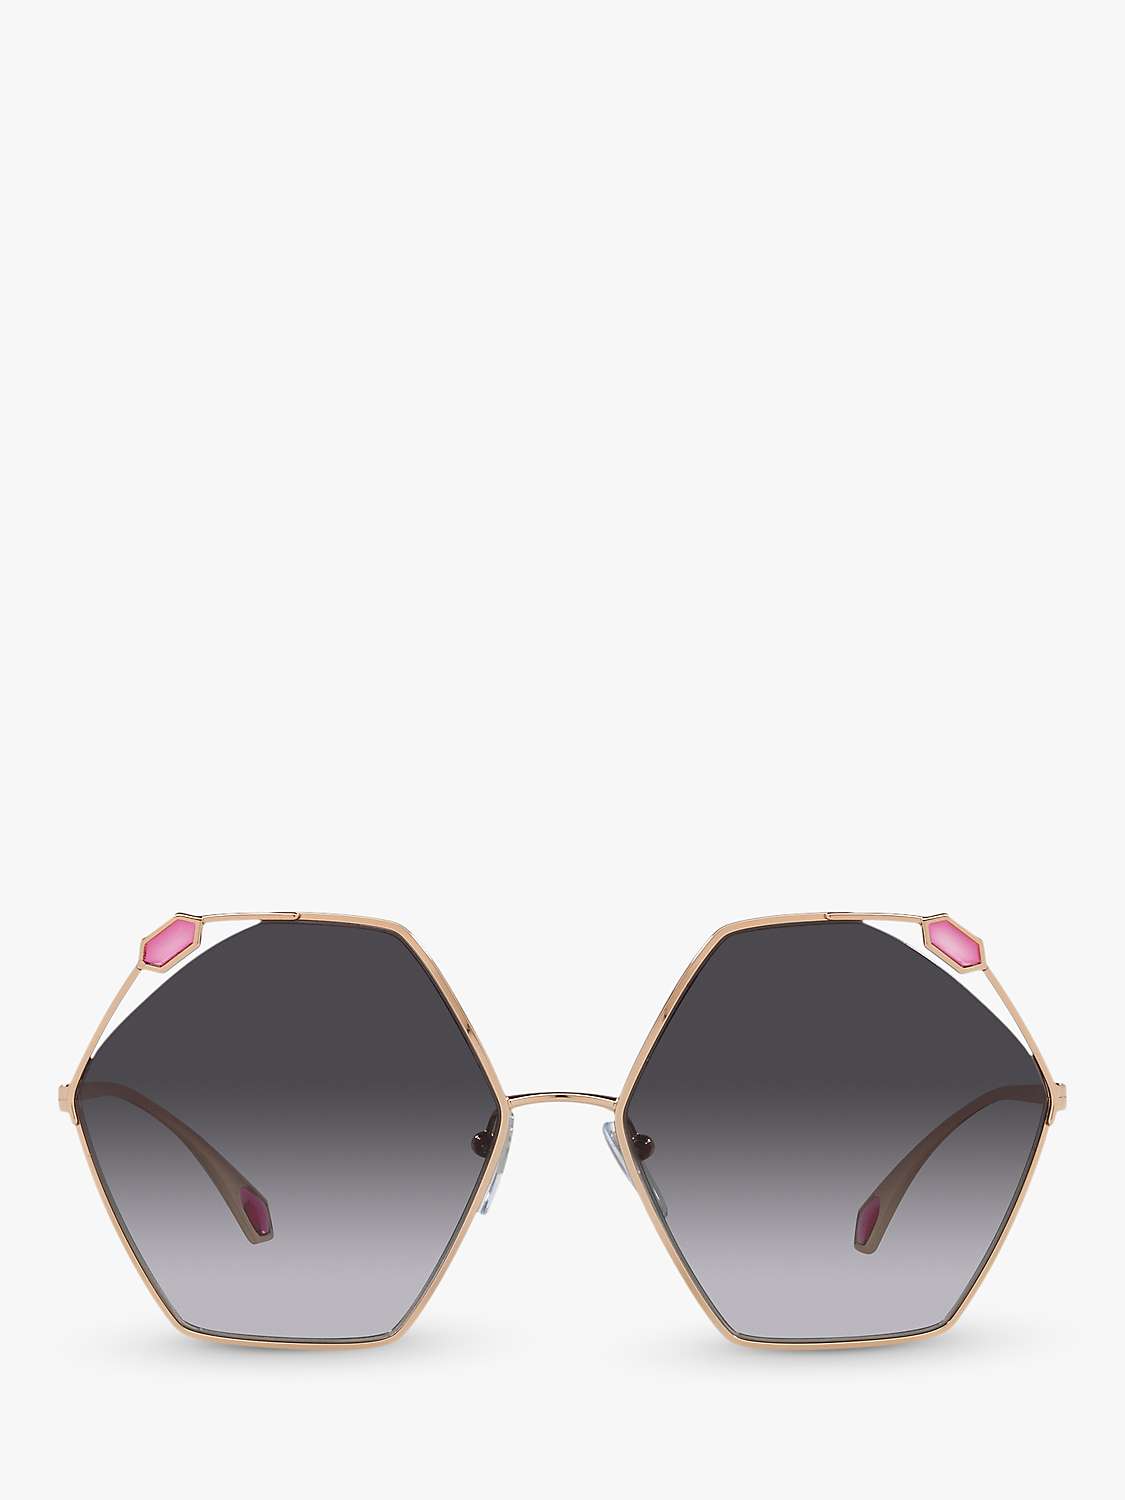 Buy BVLGARI BV6160 Women's Irregular Sunglasses, Gold/Grey Gradient Online at johnlewis.com